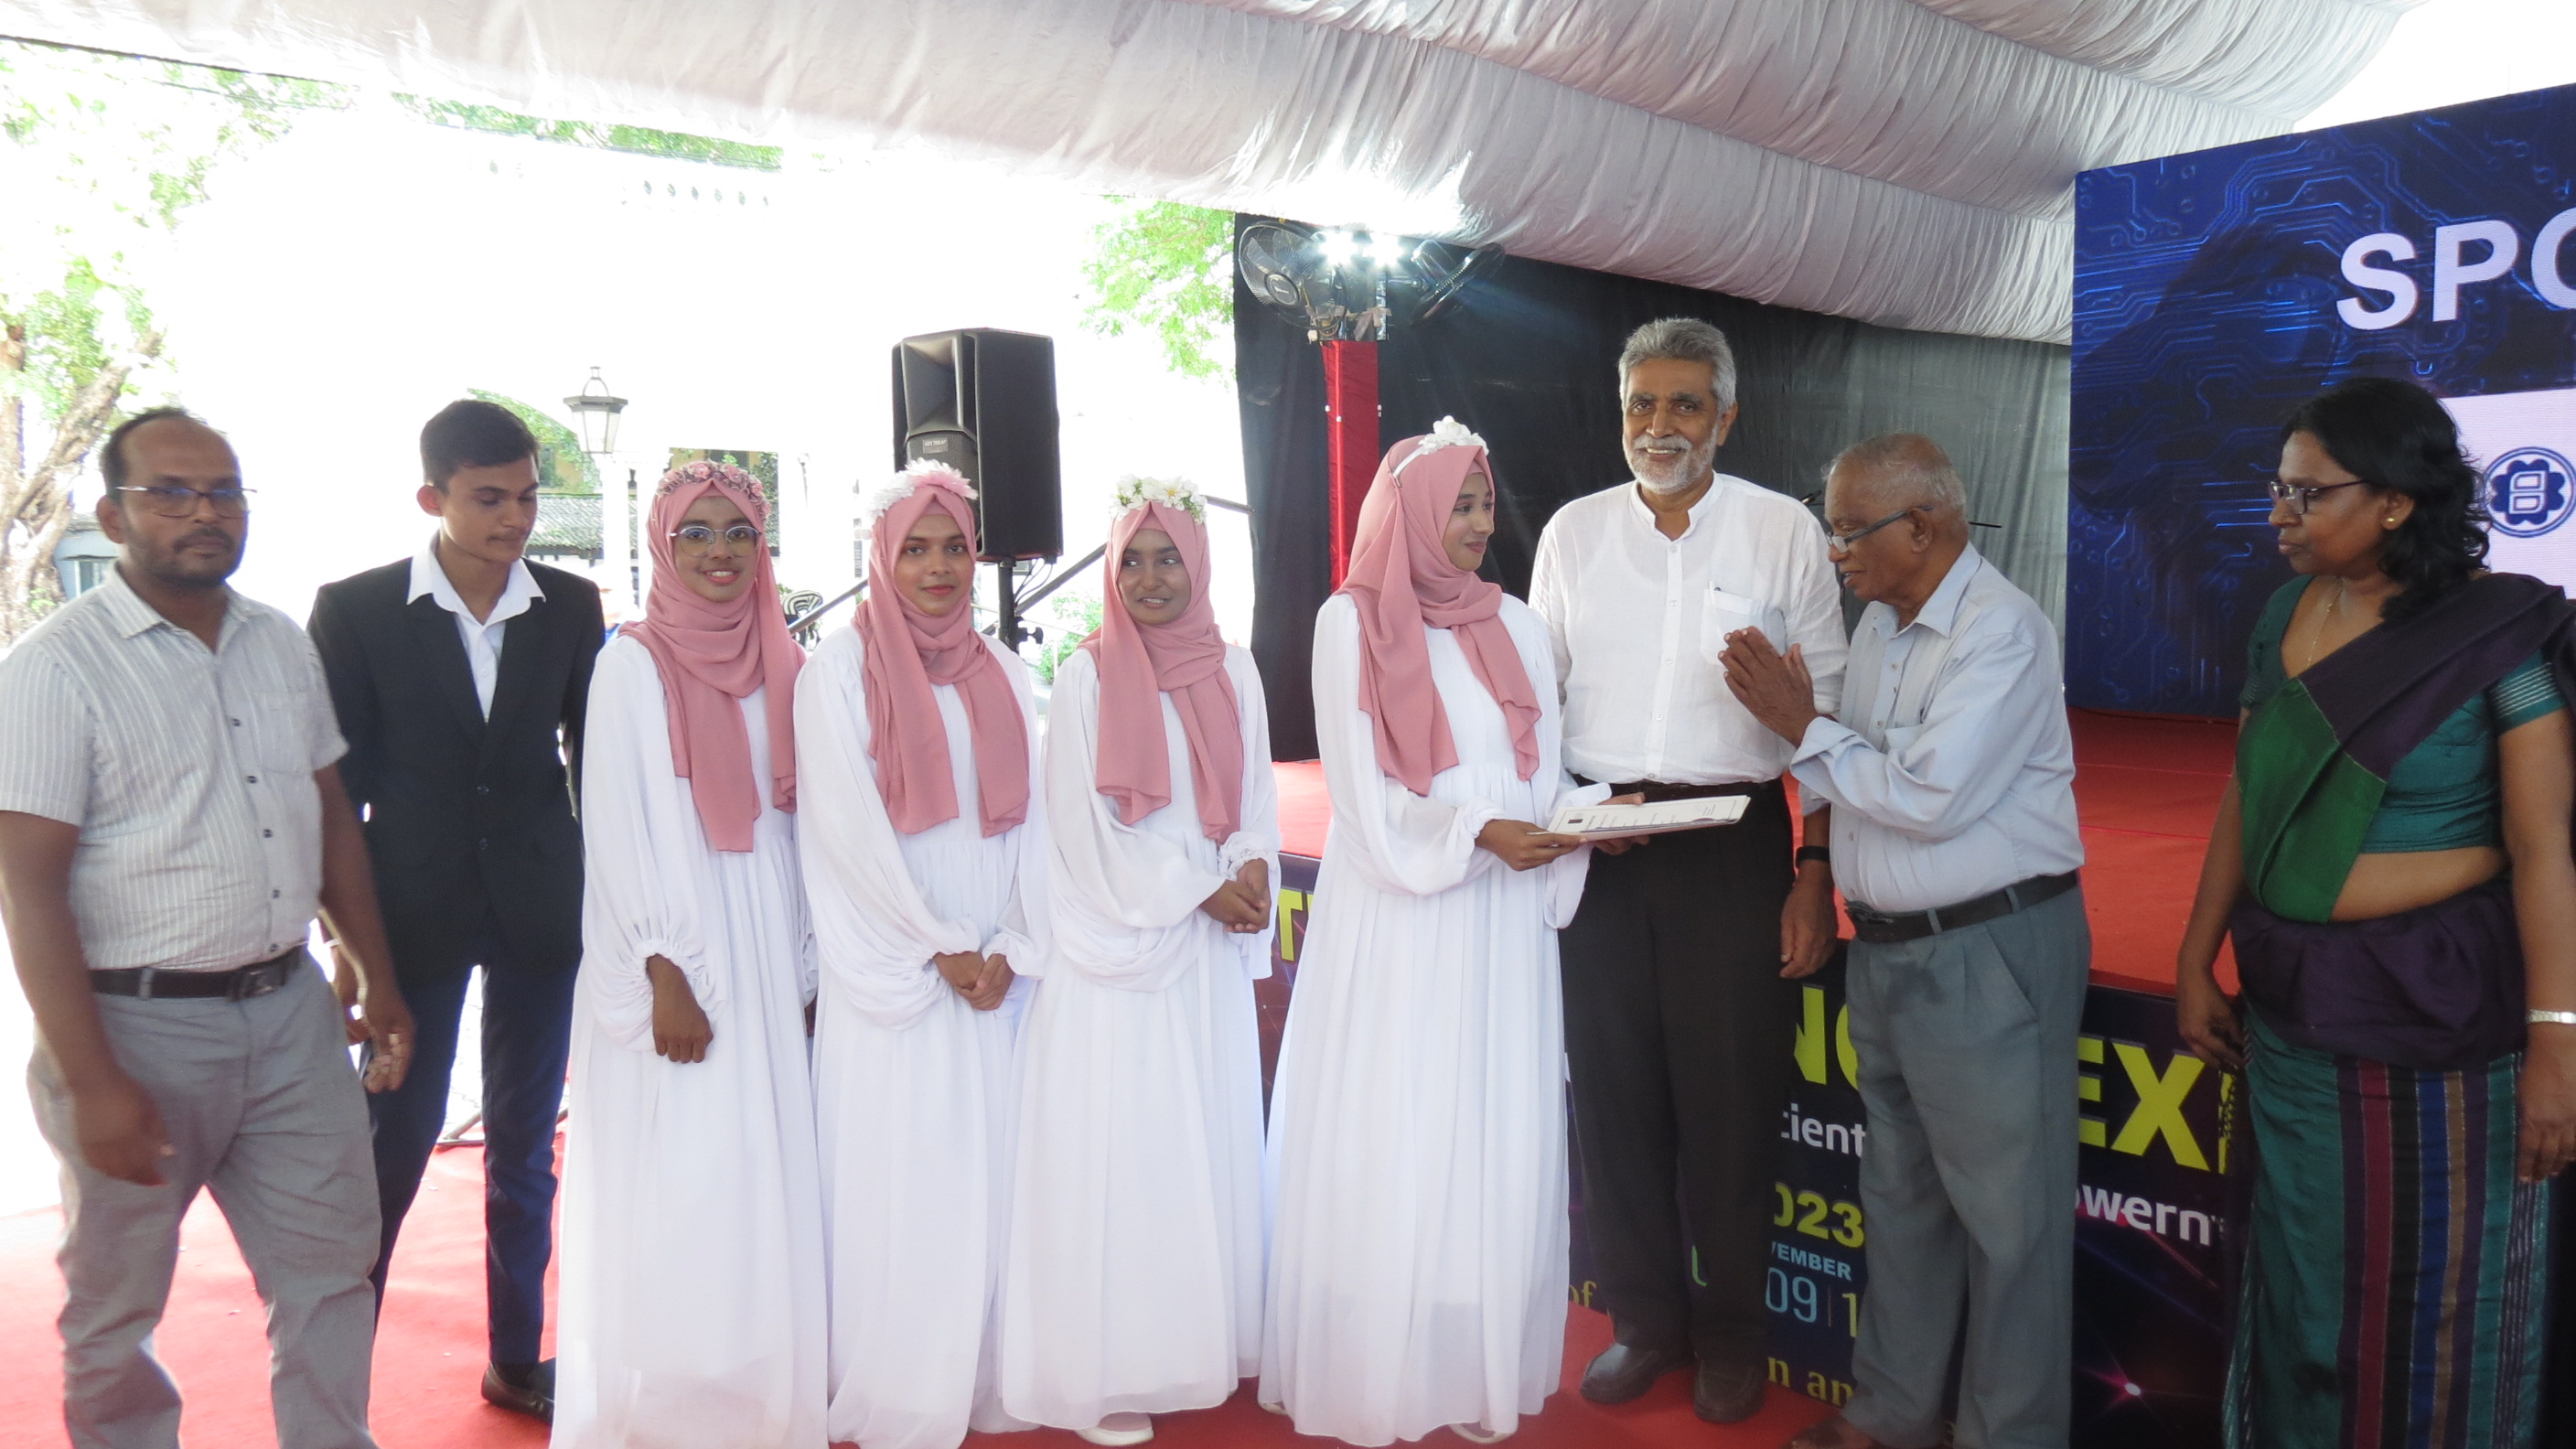 Awarding participation certificates by Dr Jayantha Wattavidange and Mr Thusitha Malalasekara